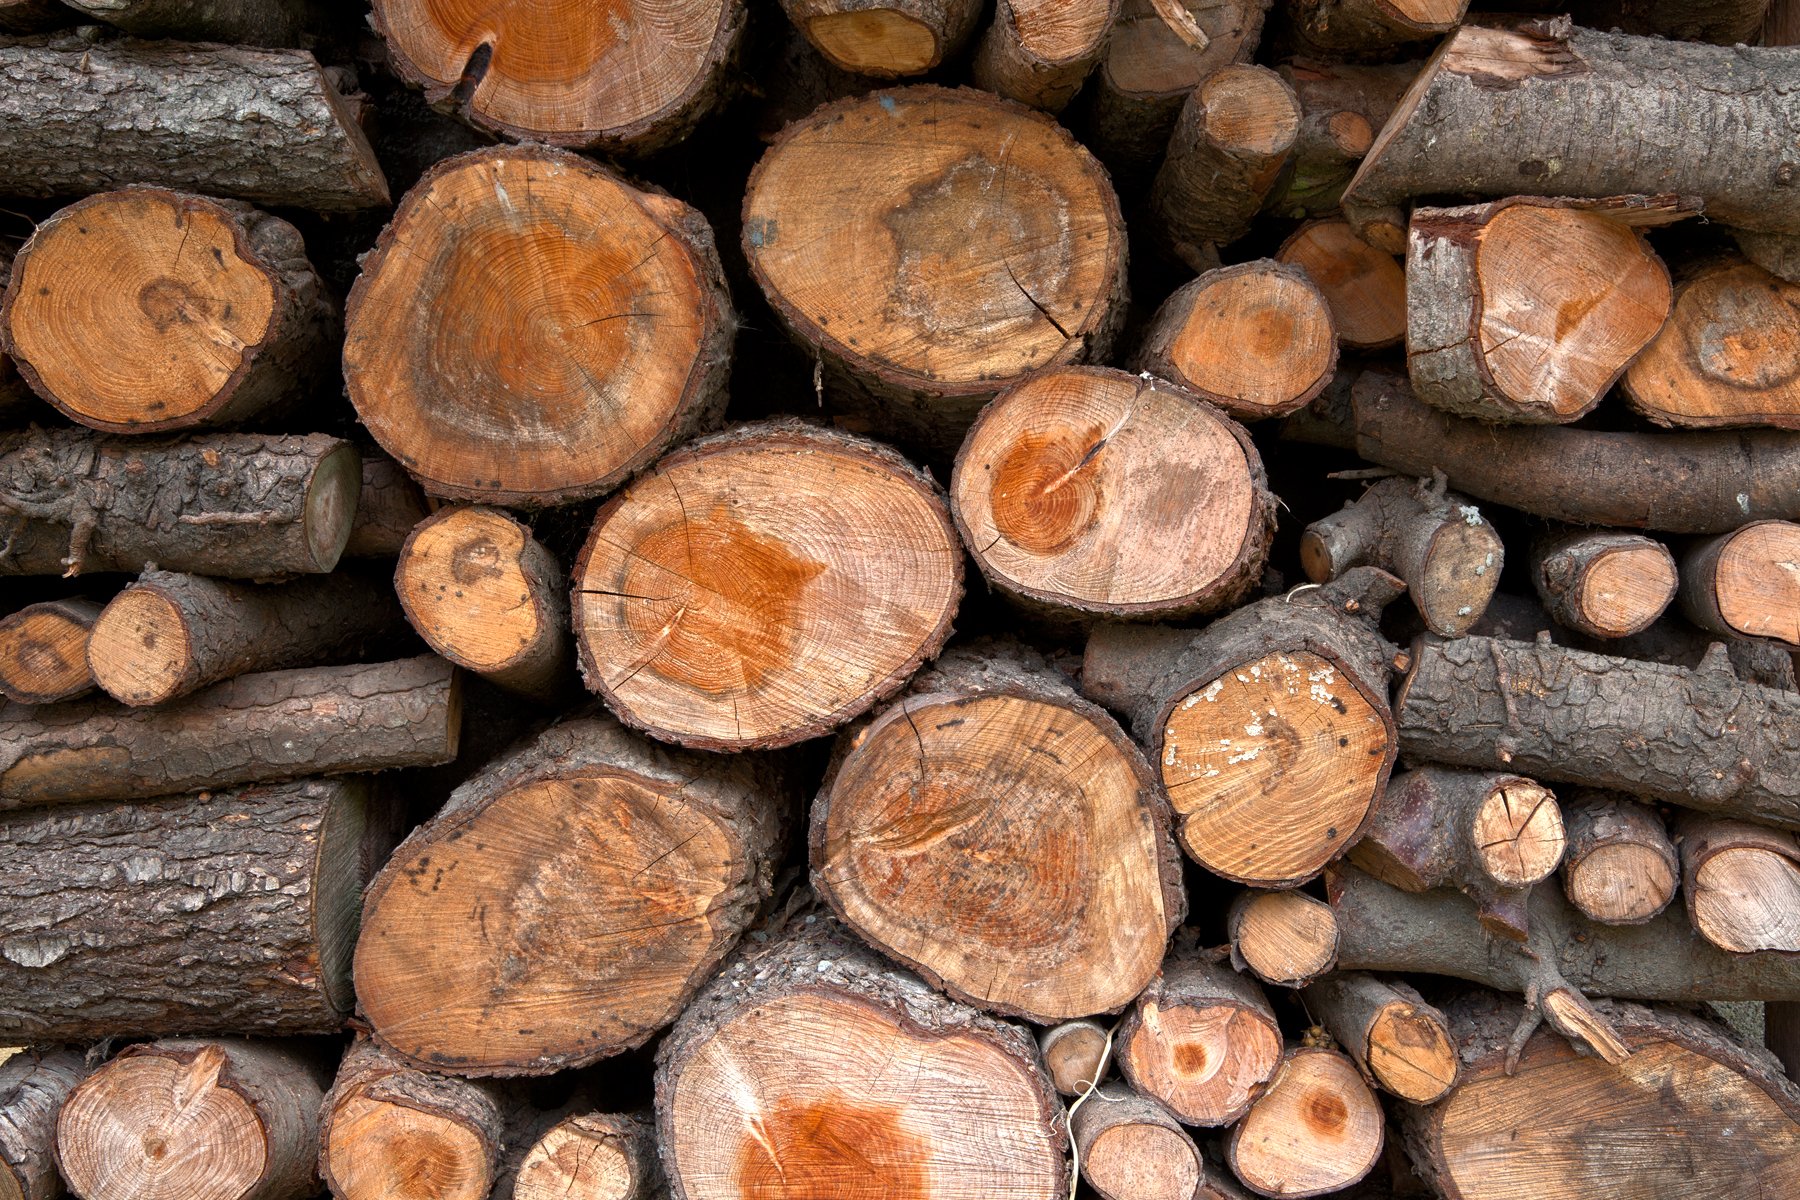  textures wood 2011 2015 somadjinn wood log texture captured in the 1800x1200